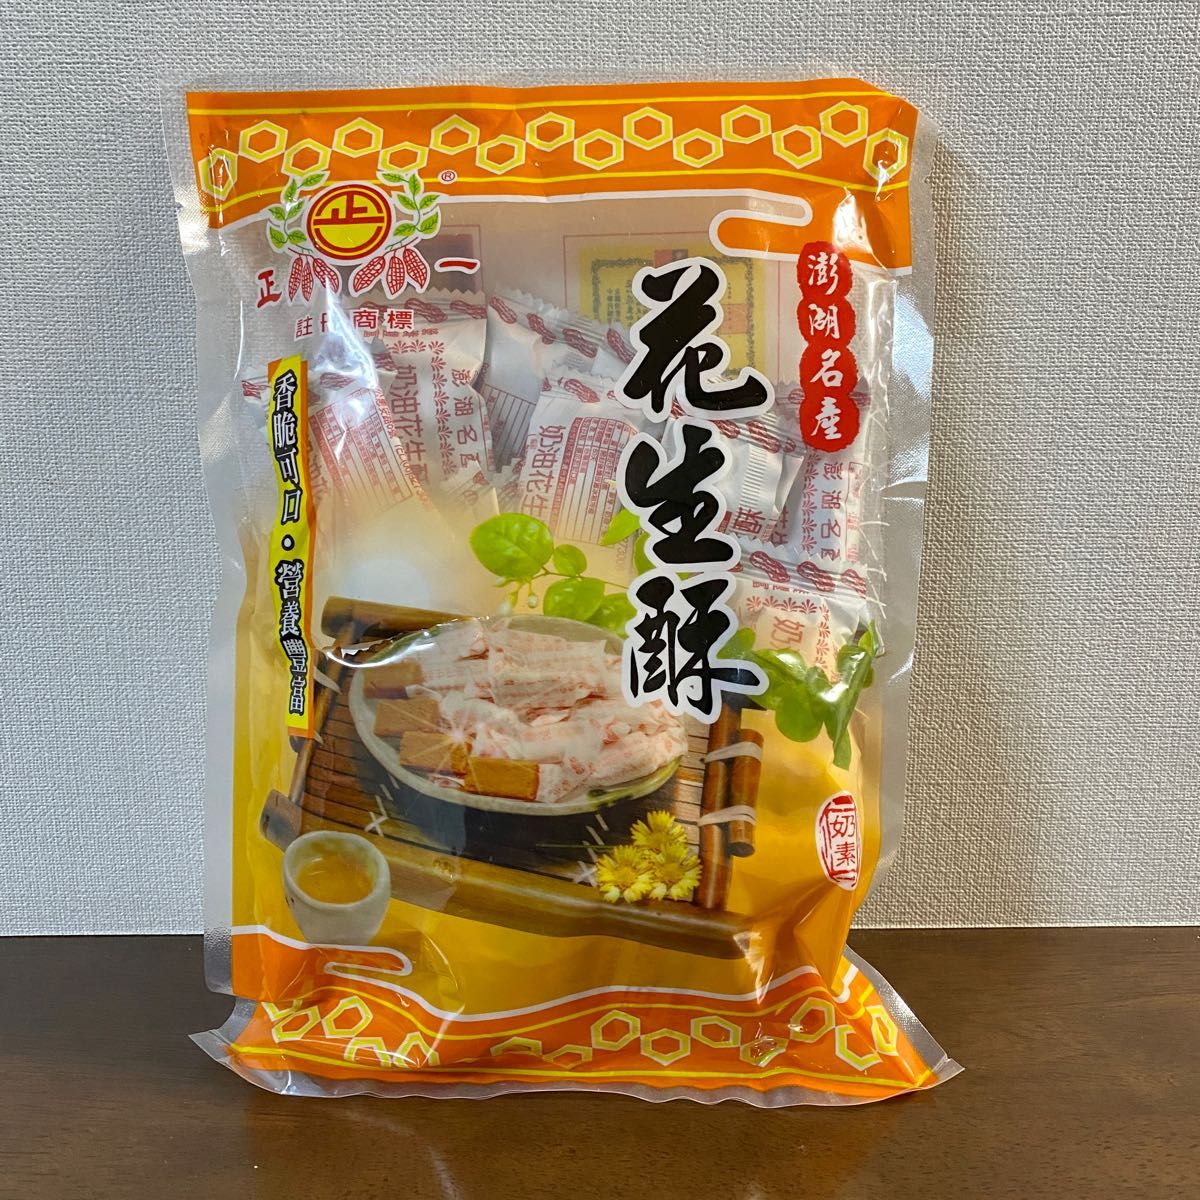 台湾お菓子 澎湖 正一 バターピーナッツ 奶油花生酥 220g - 菓子